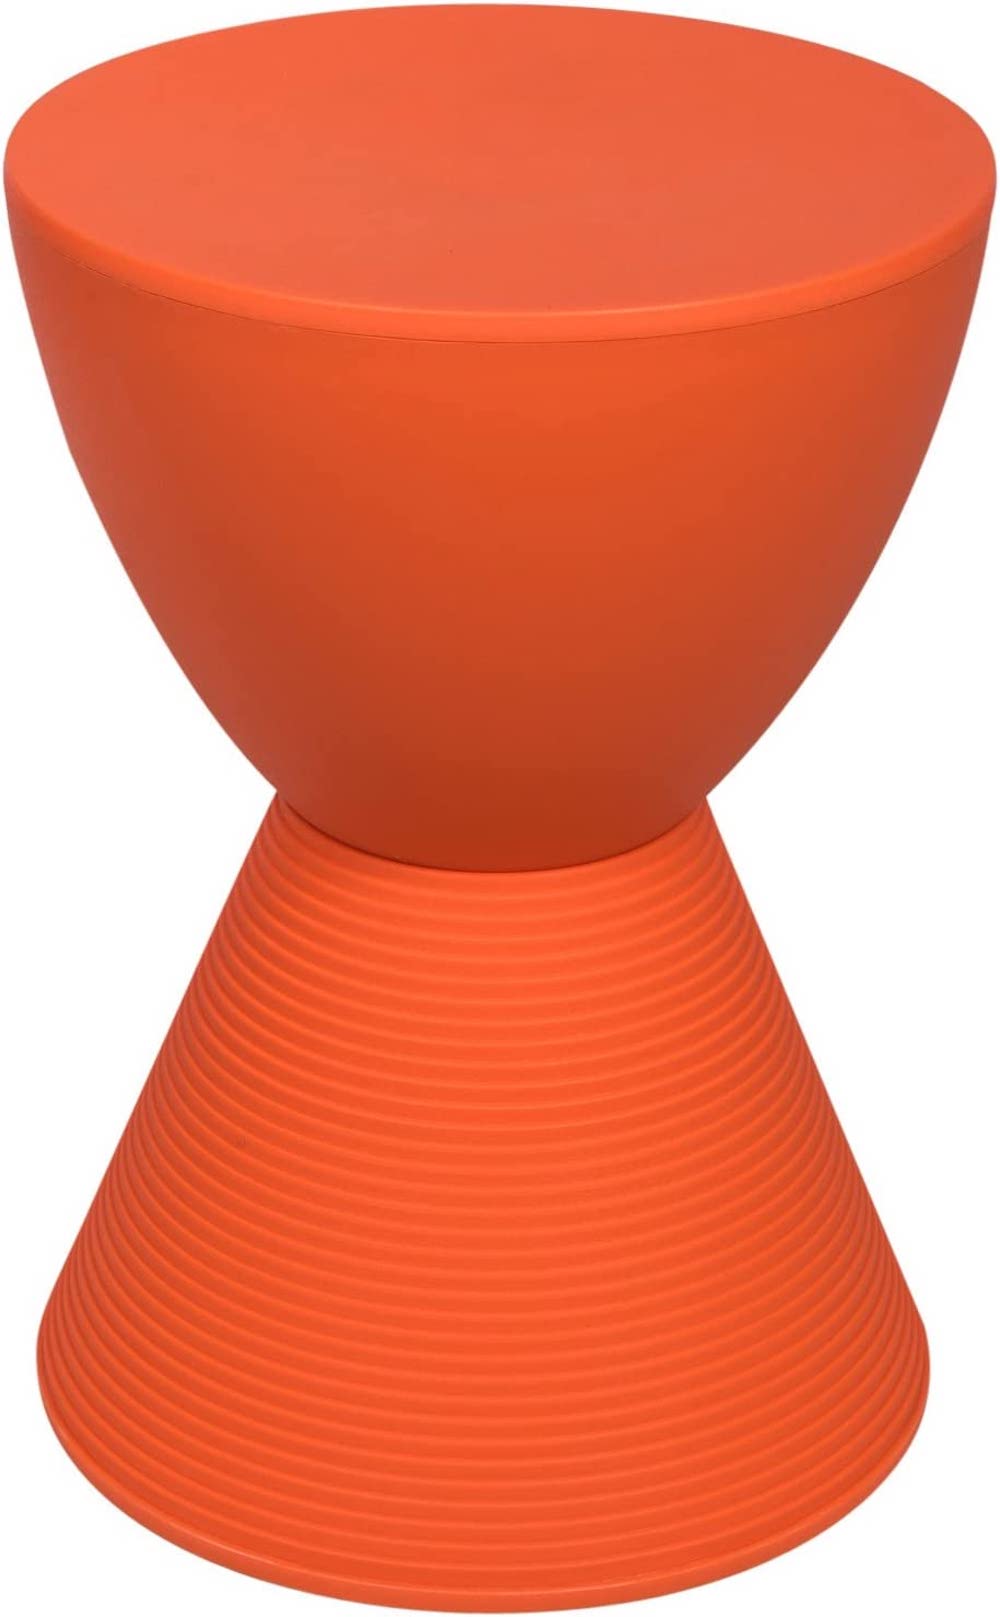 Fluted orange table